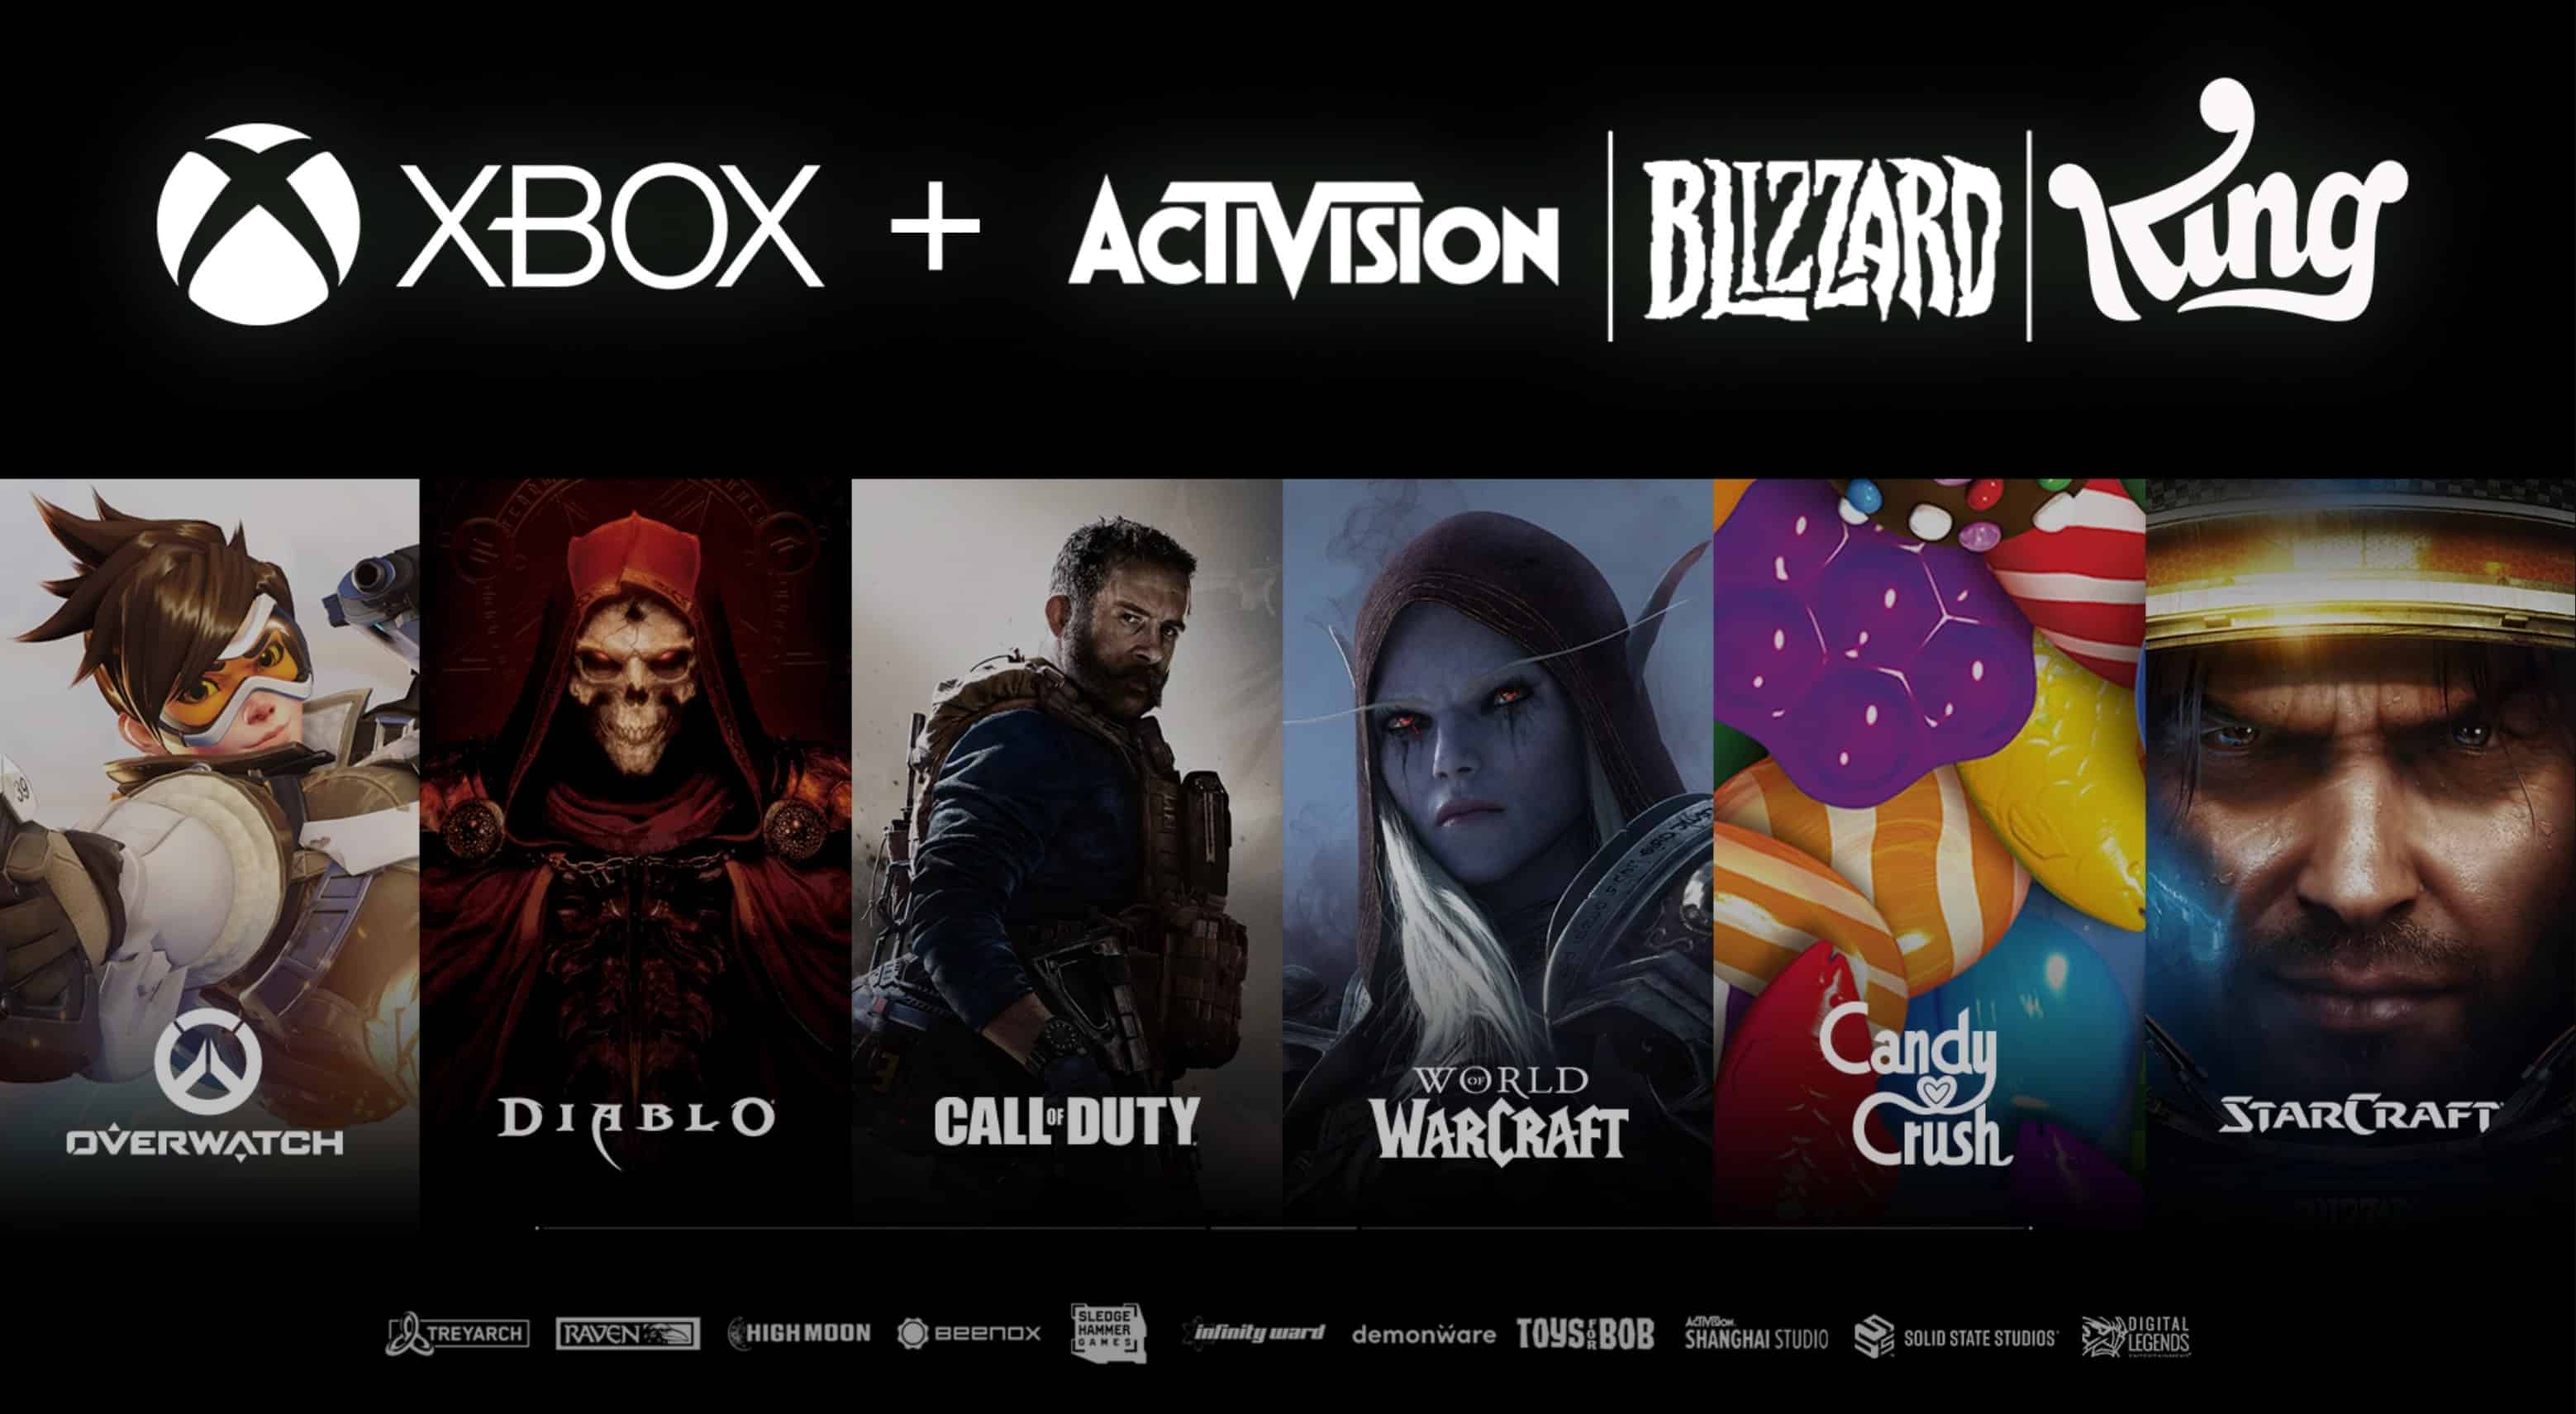 Xbox Activision Blizzard merger graphic